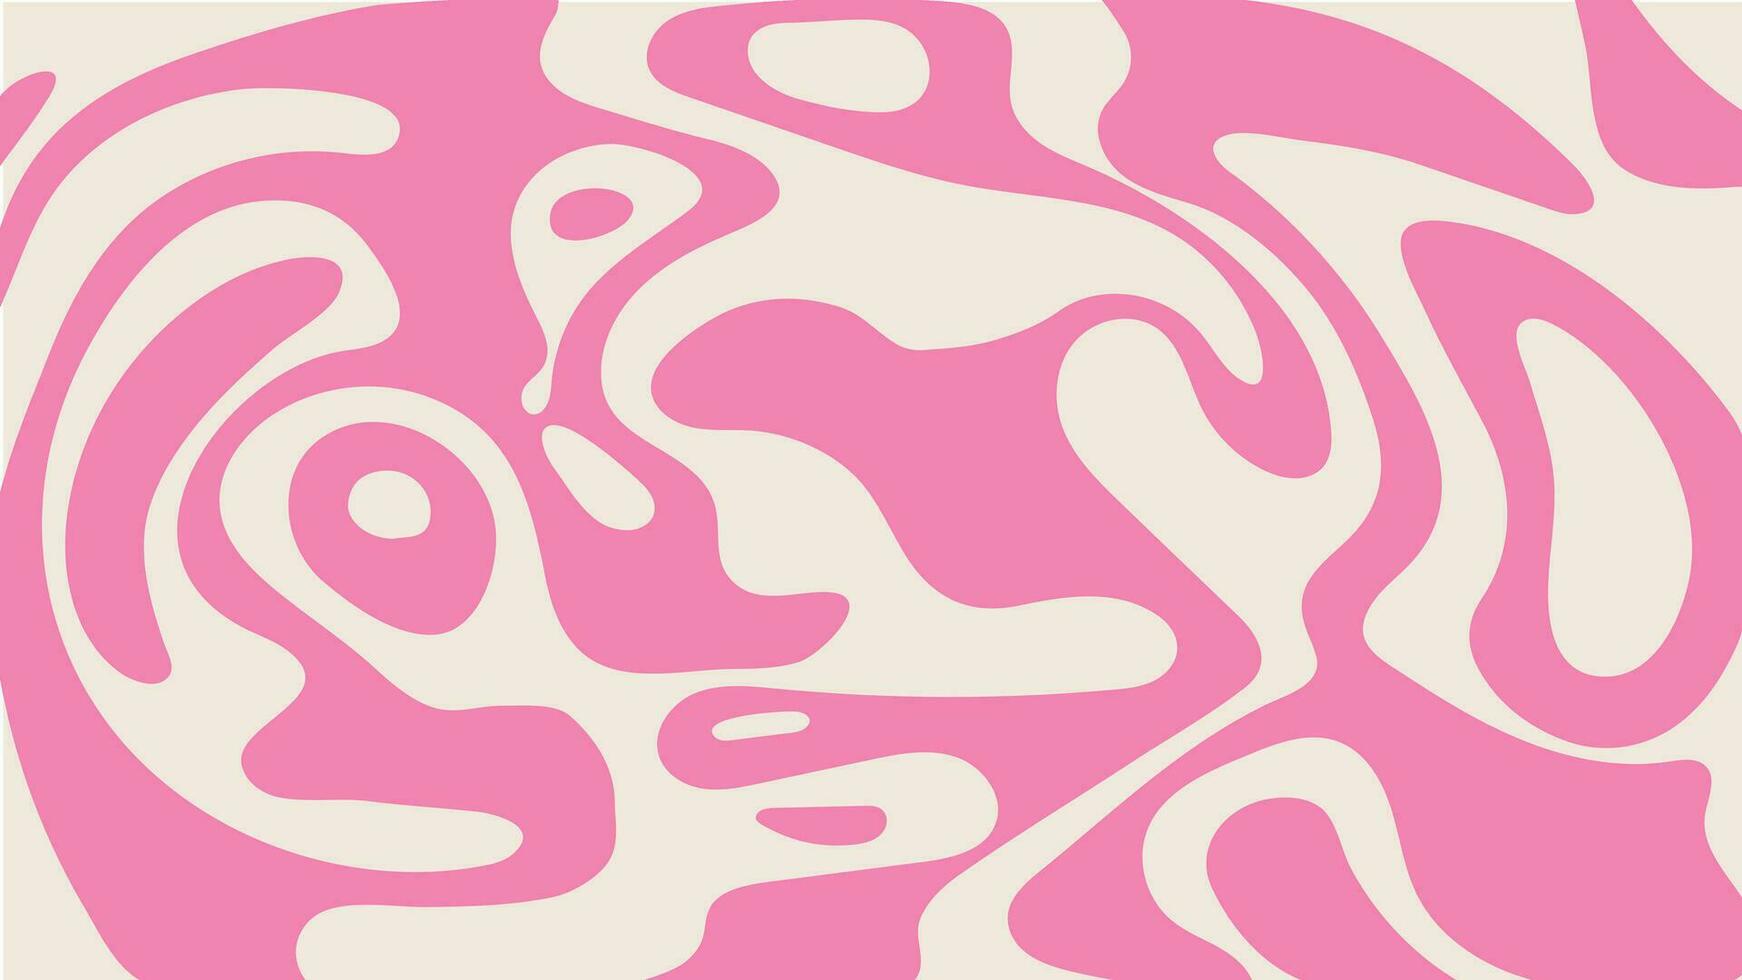 sencillo trippy antecedentes con rosado ondulado líneas modelo. resumen maravilloso fondo en retro 60-70 estilo. frio miedoso onda rayas diseño vector